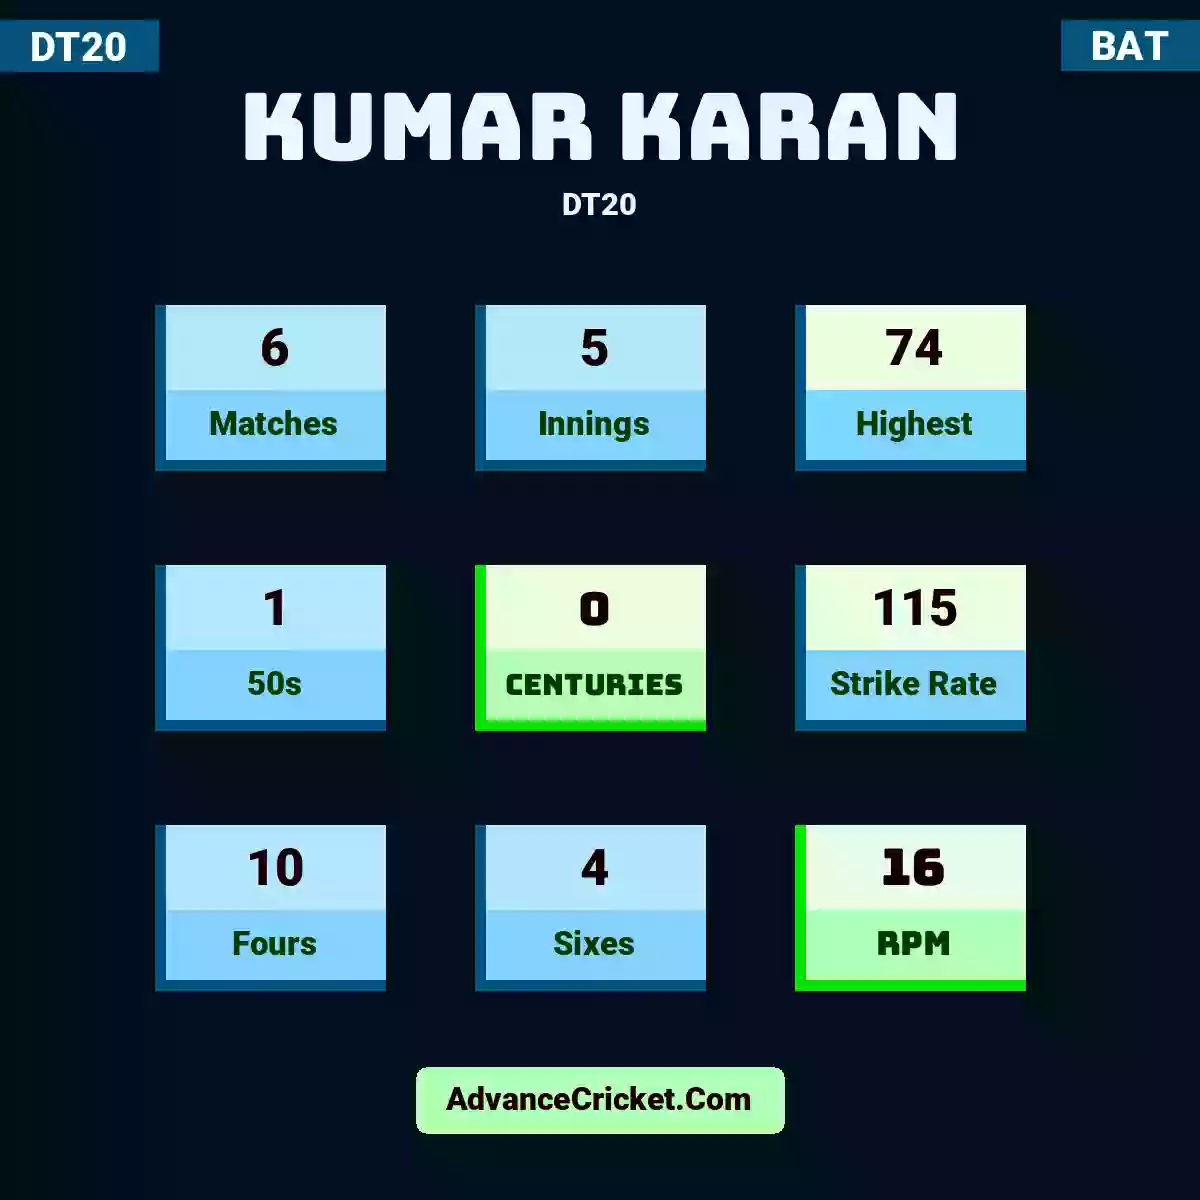 Kumar Karan DT20 , Kumar Karan played 6 matches, scored 74 runs as highest, 1 half-centuries, and 0 centuries, with a strike rate of 115. K.Karan hit 10 fours and 4 sixes, with an RPM of 16.